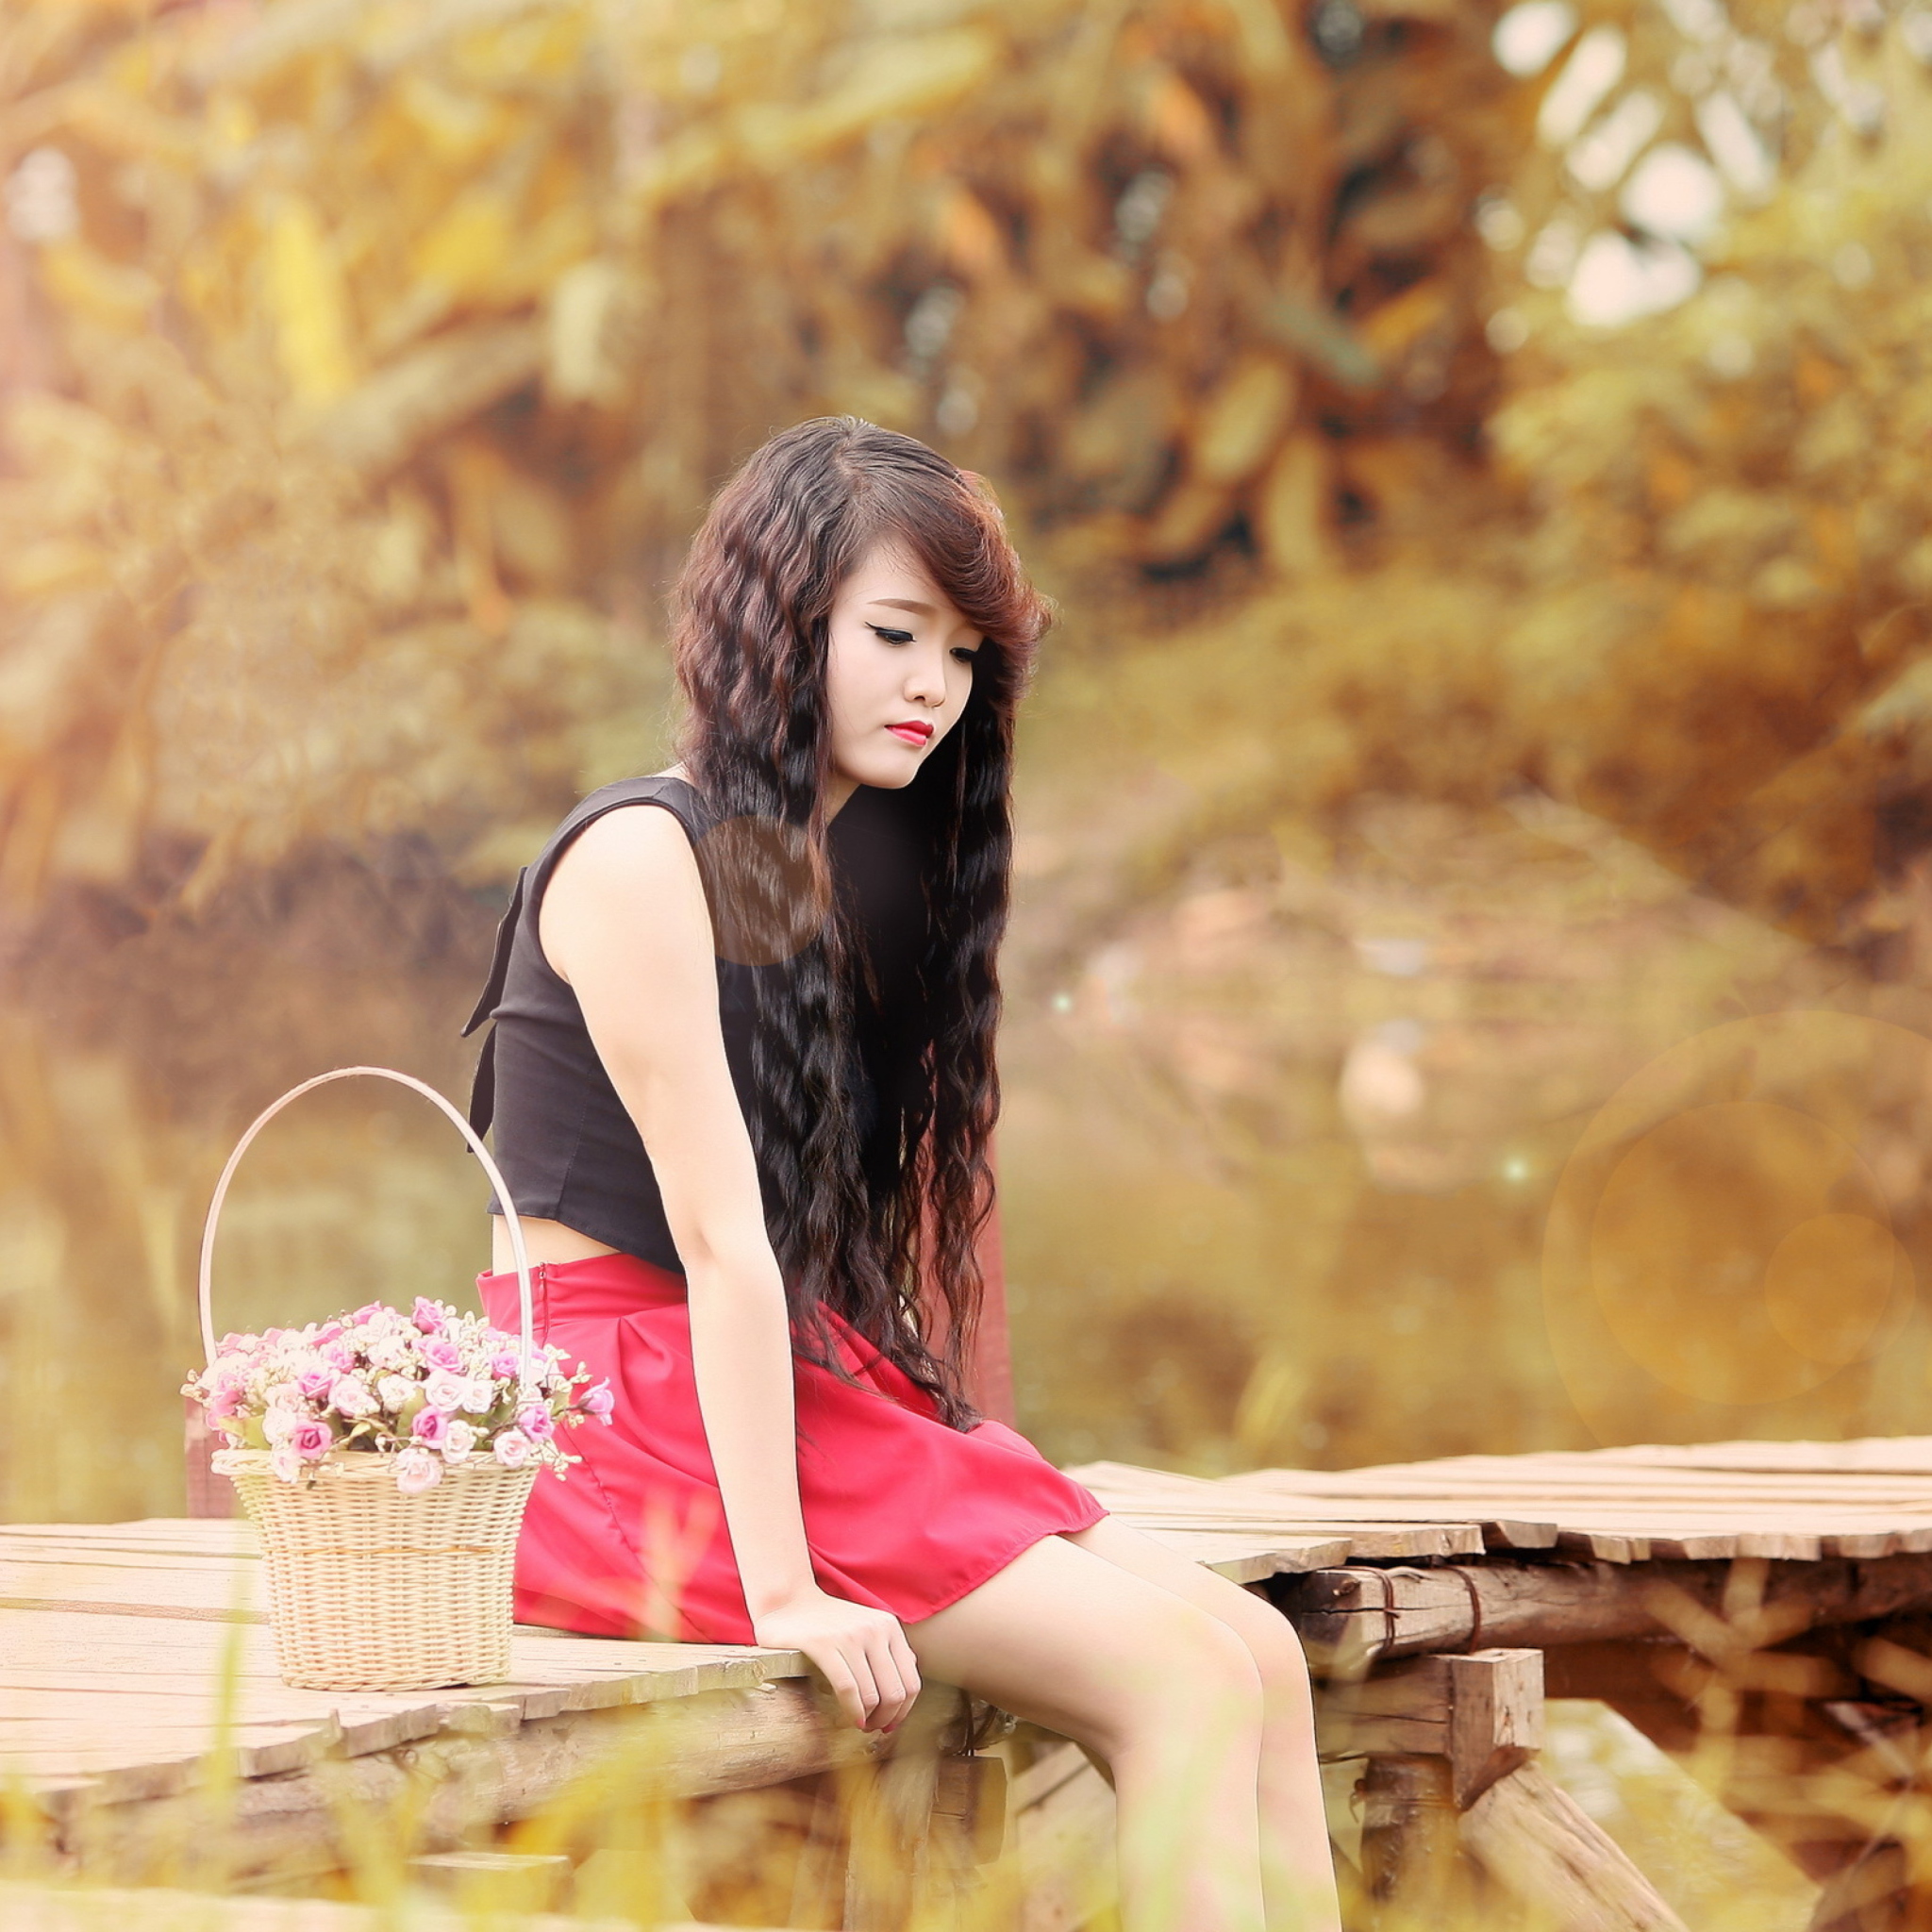 Sad Asian Girl With Flower Basket wallpaper 2048x2048